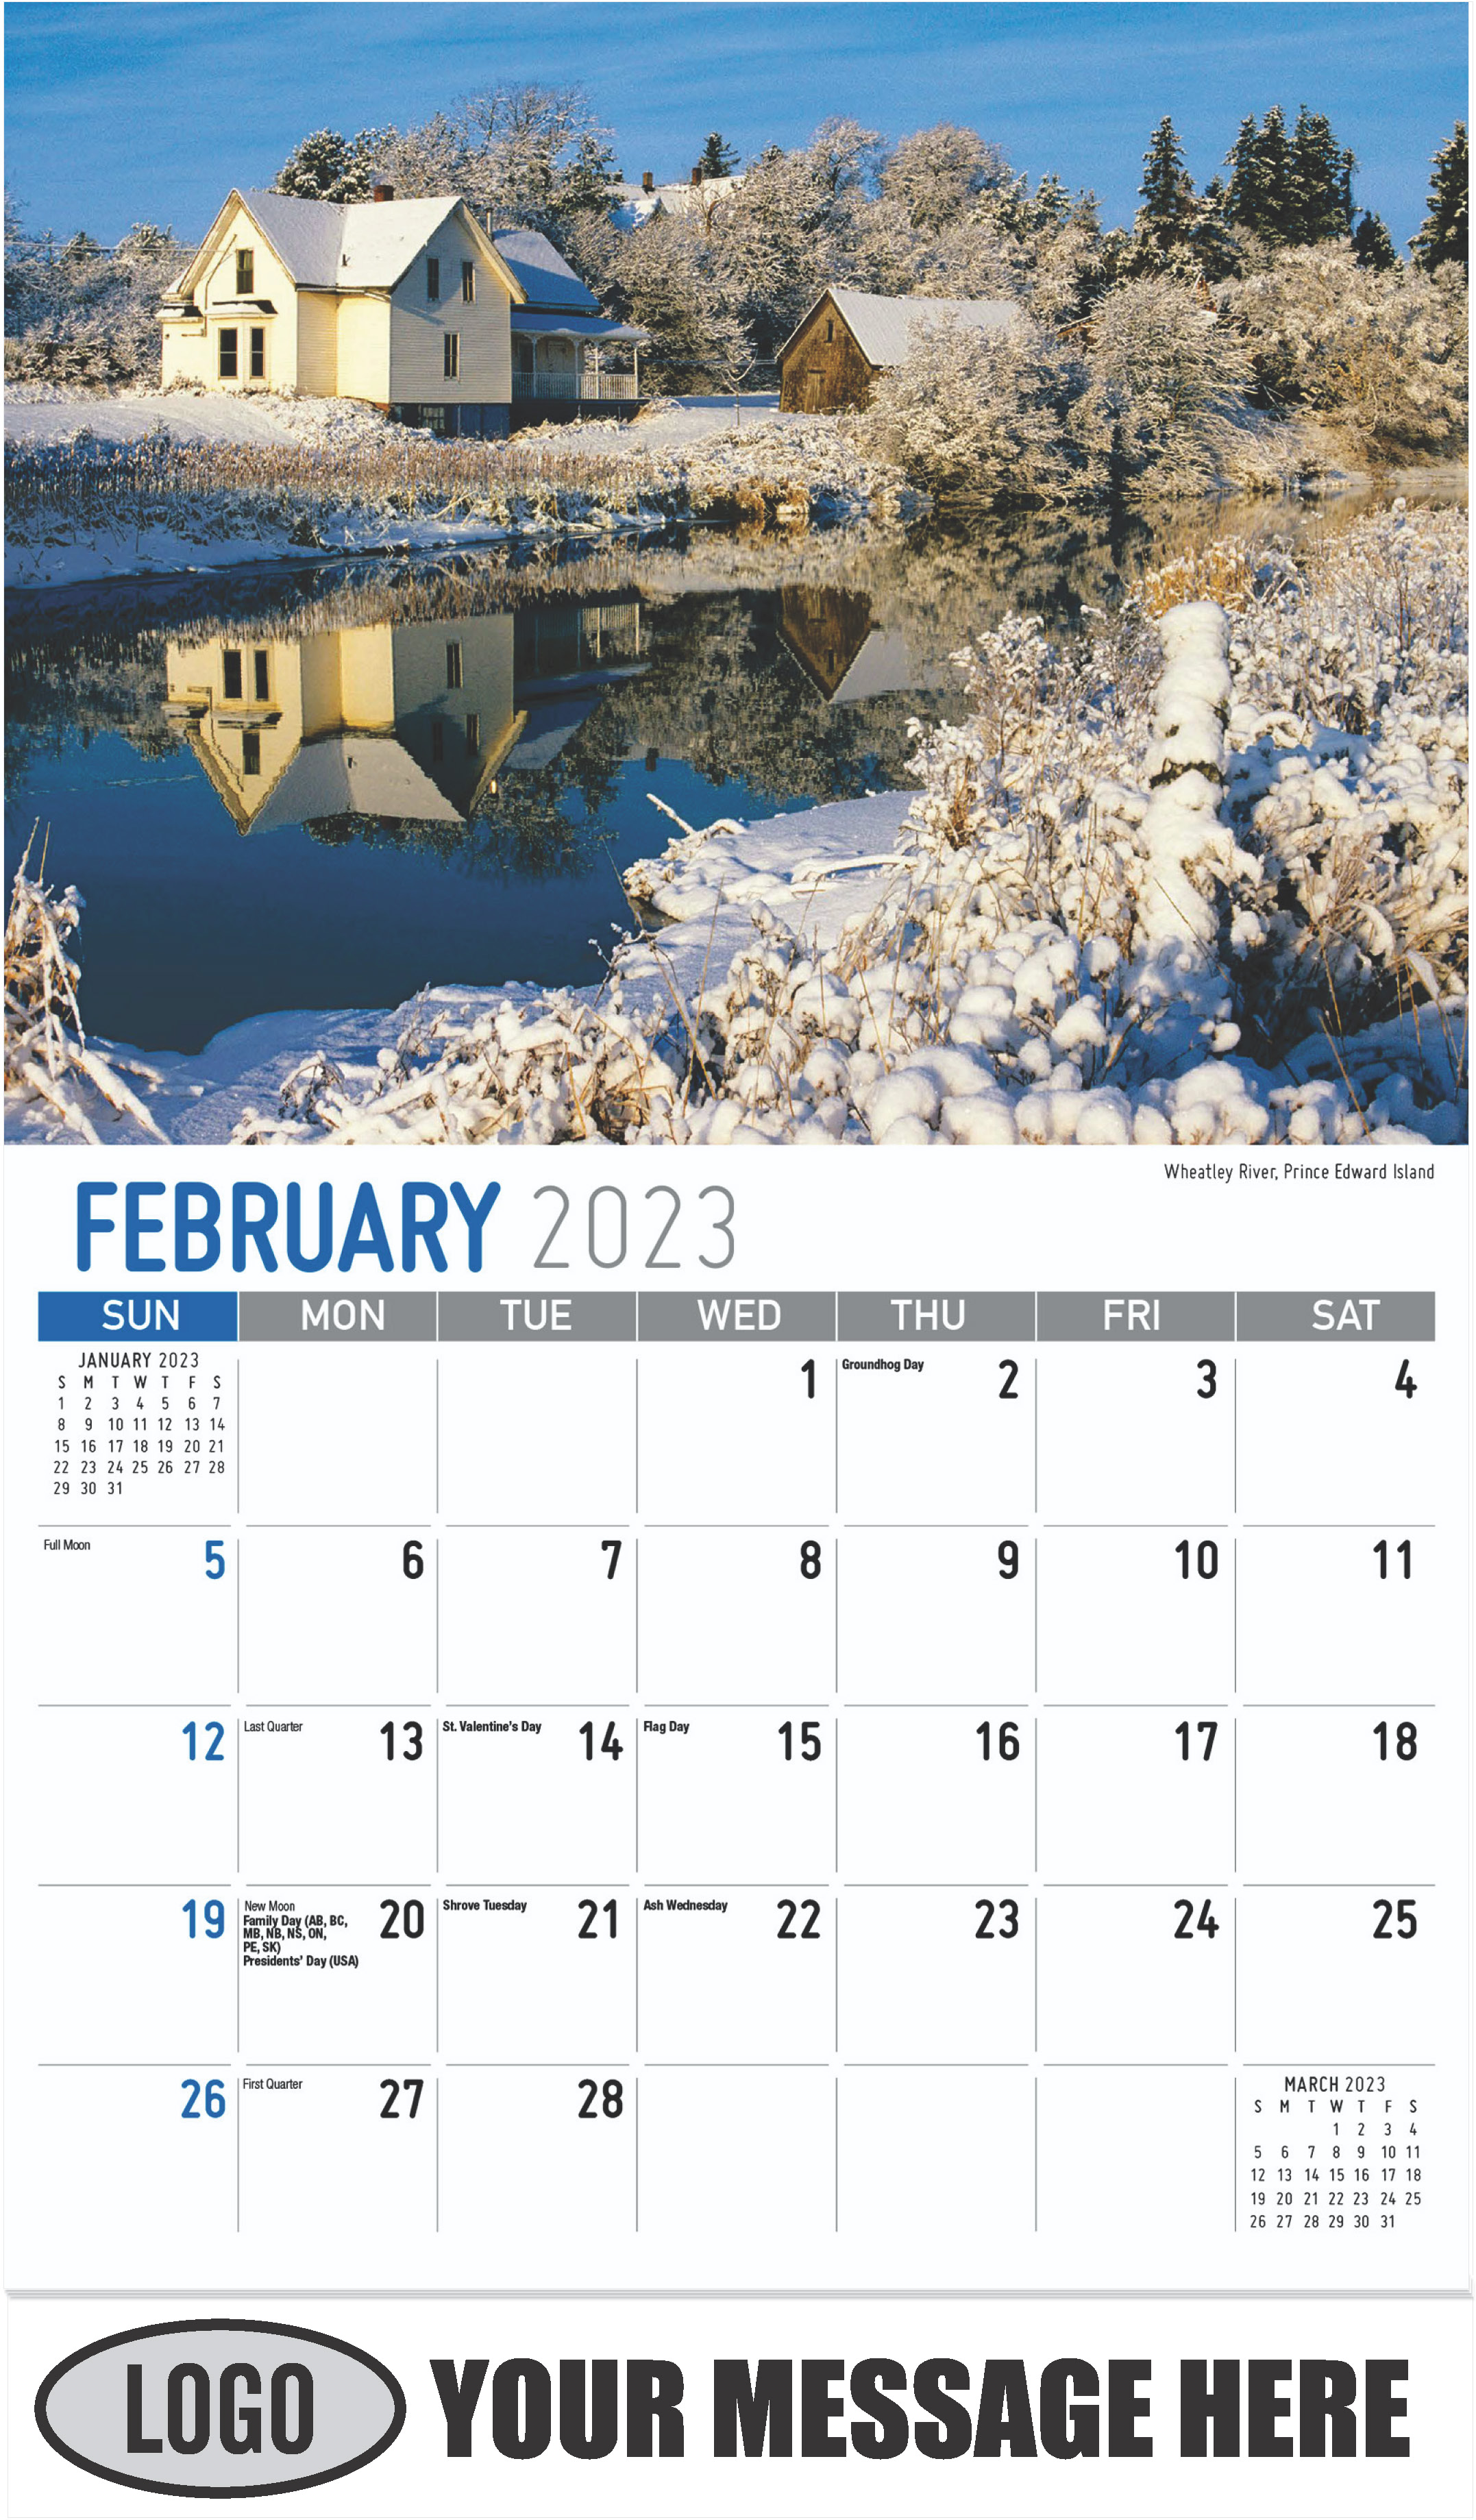 Wheatley River, Prince Edward Island - February - Atlantic Canada 2023 Promotional Calendar